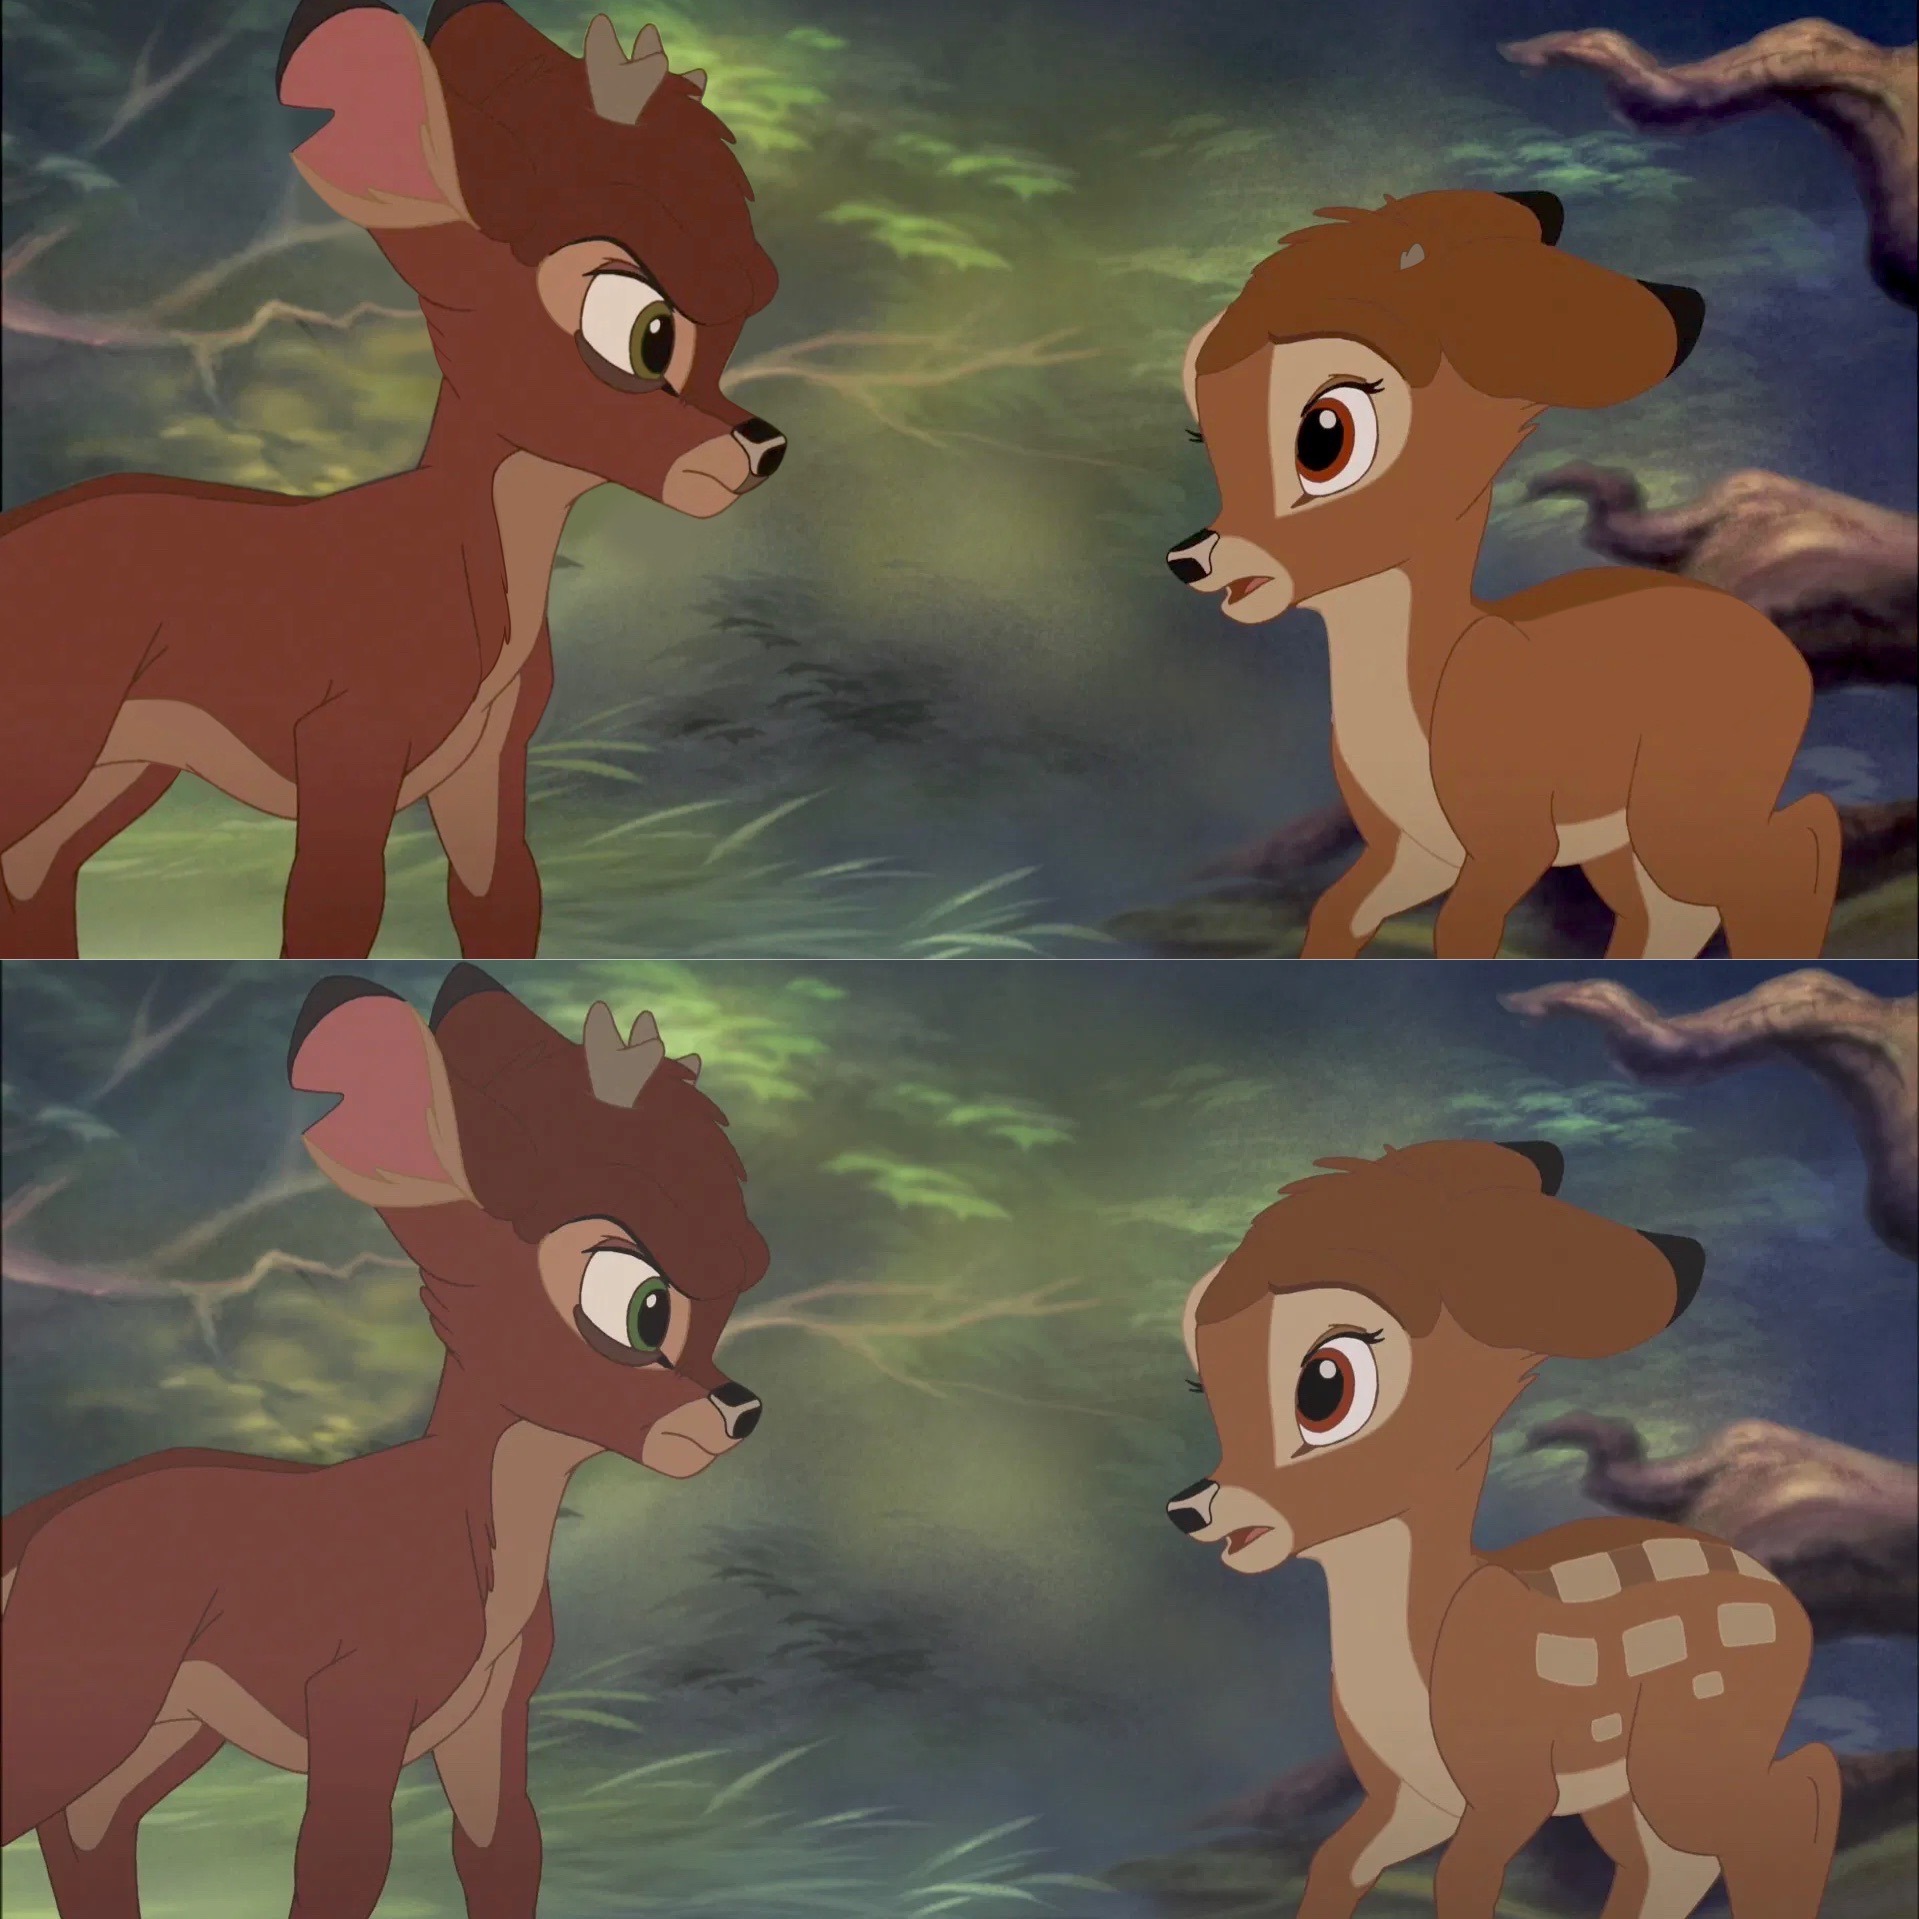 Blushing bambi real the callawayapparel.sanei.net :